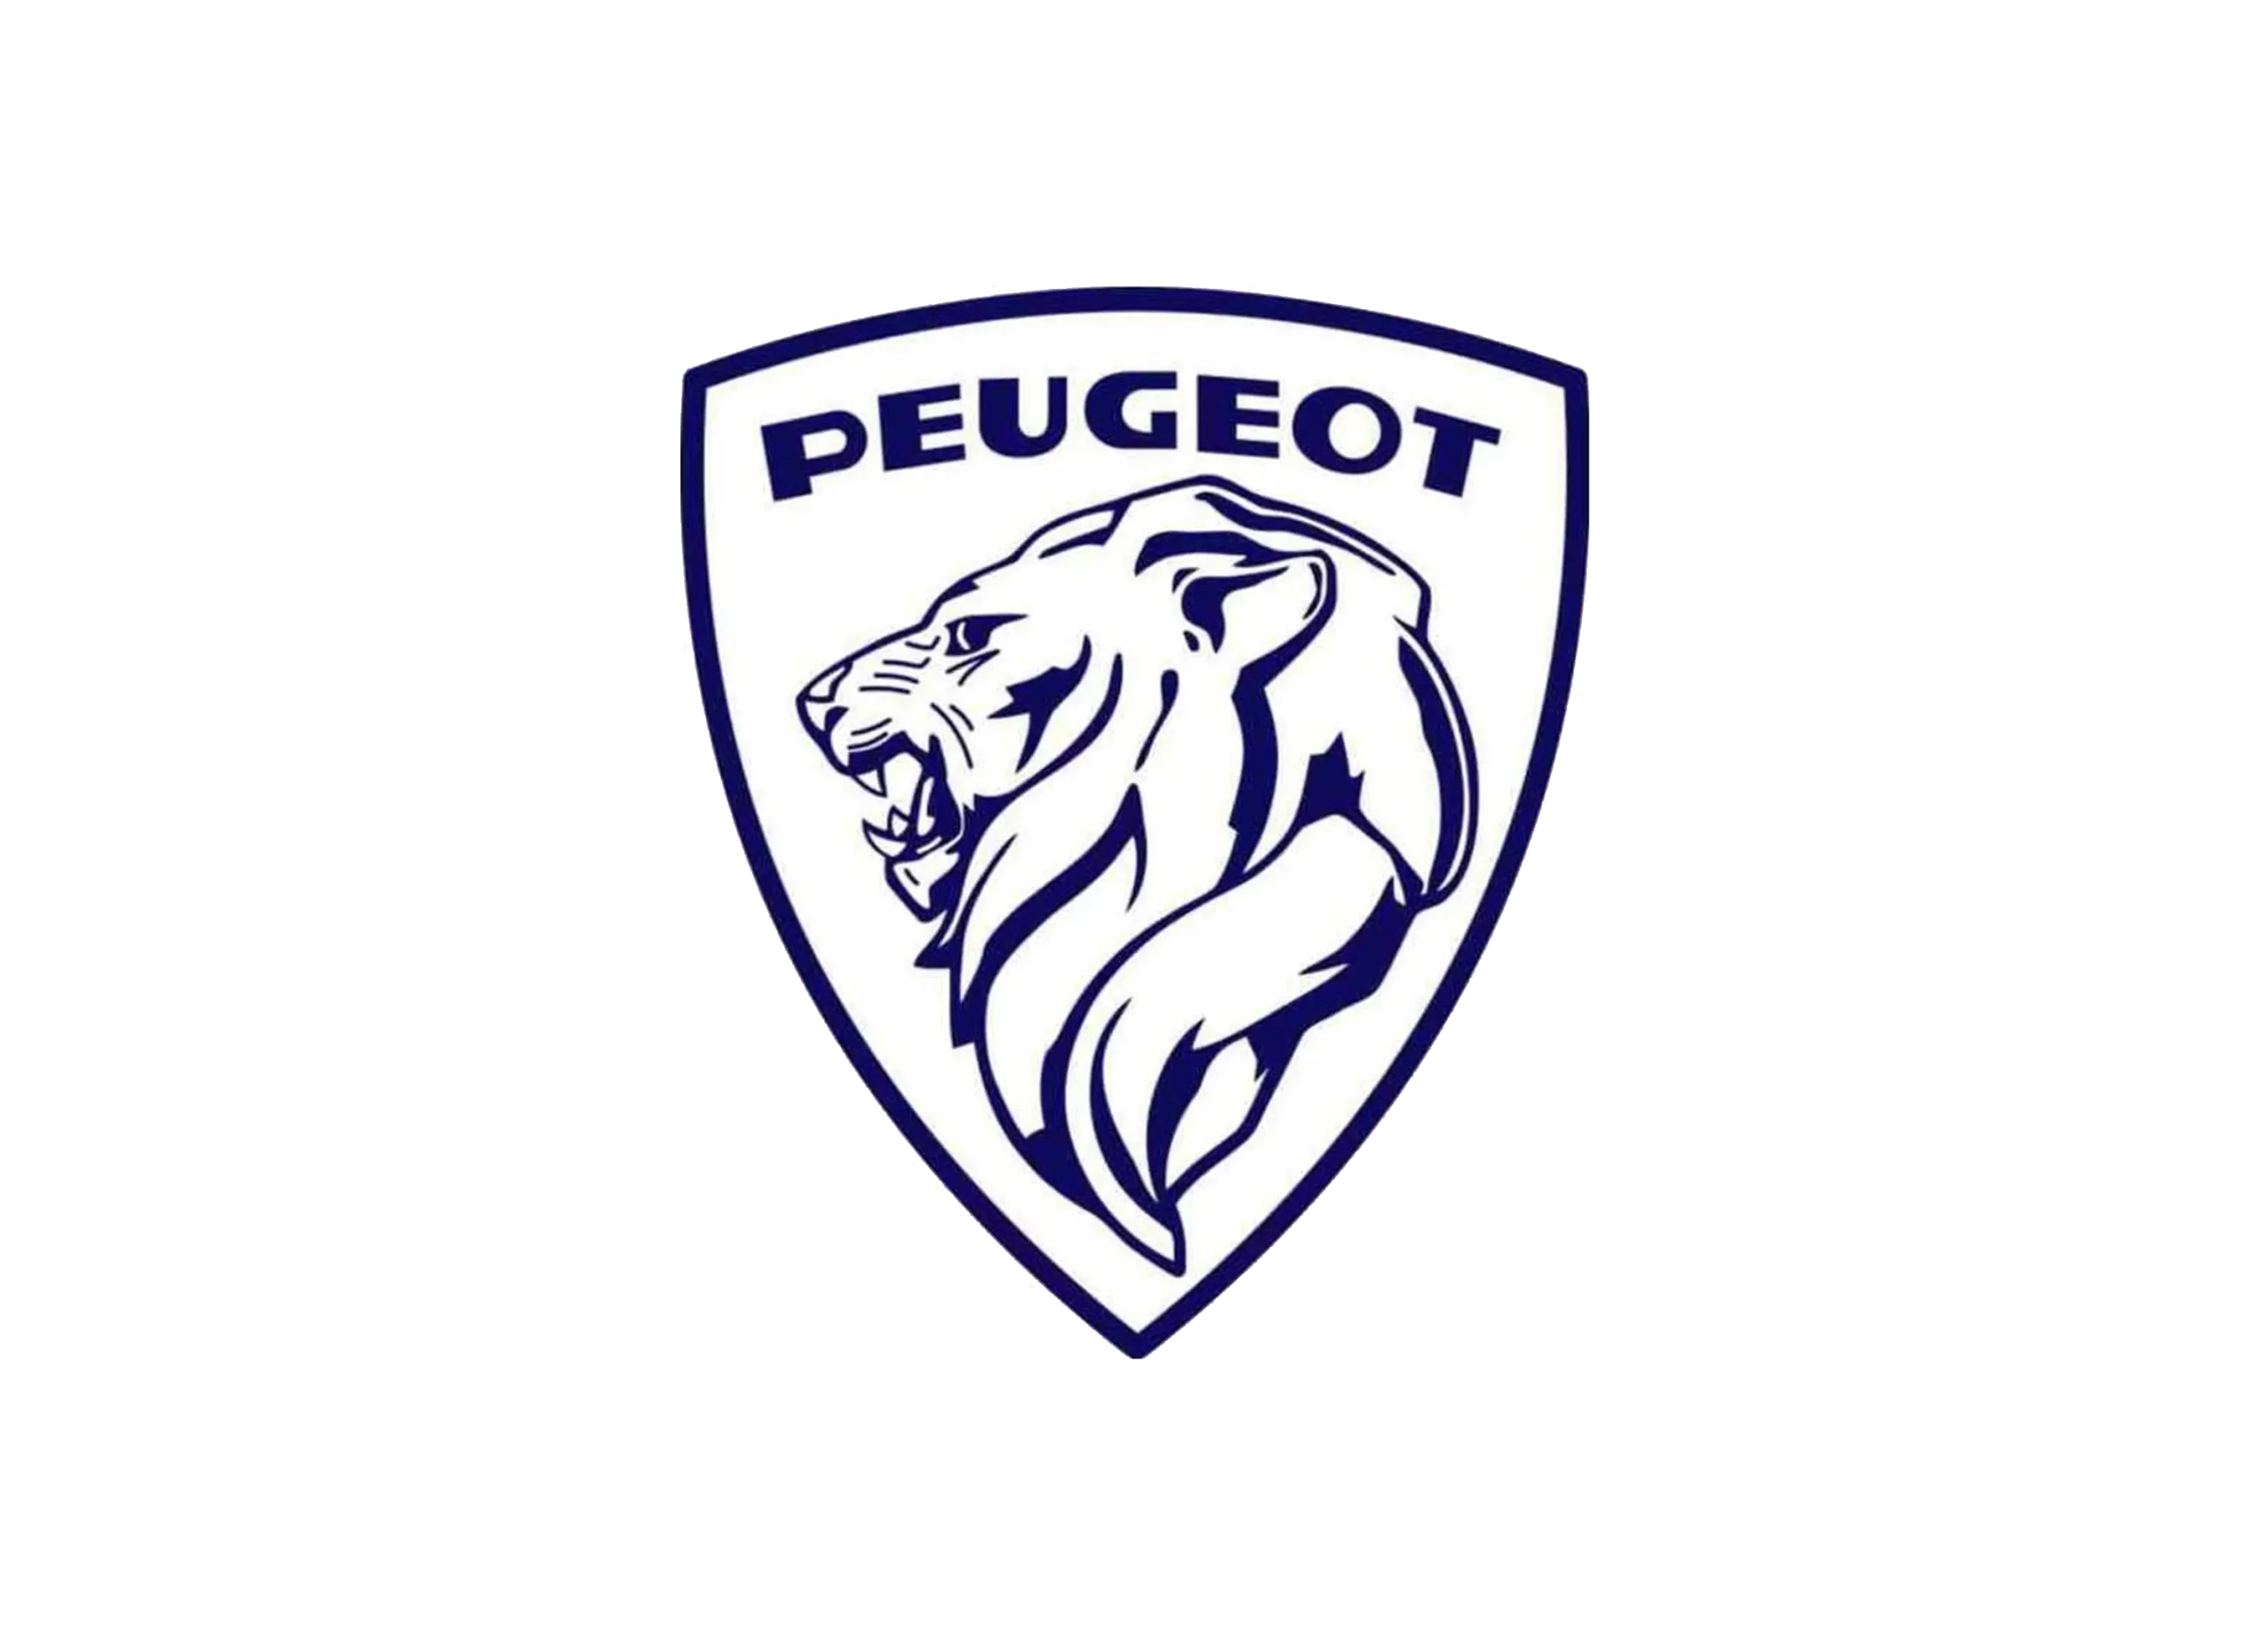 Peugeot logo 1960-1968